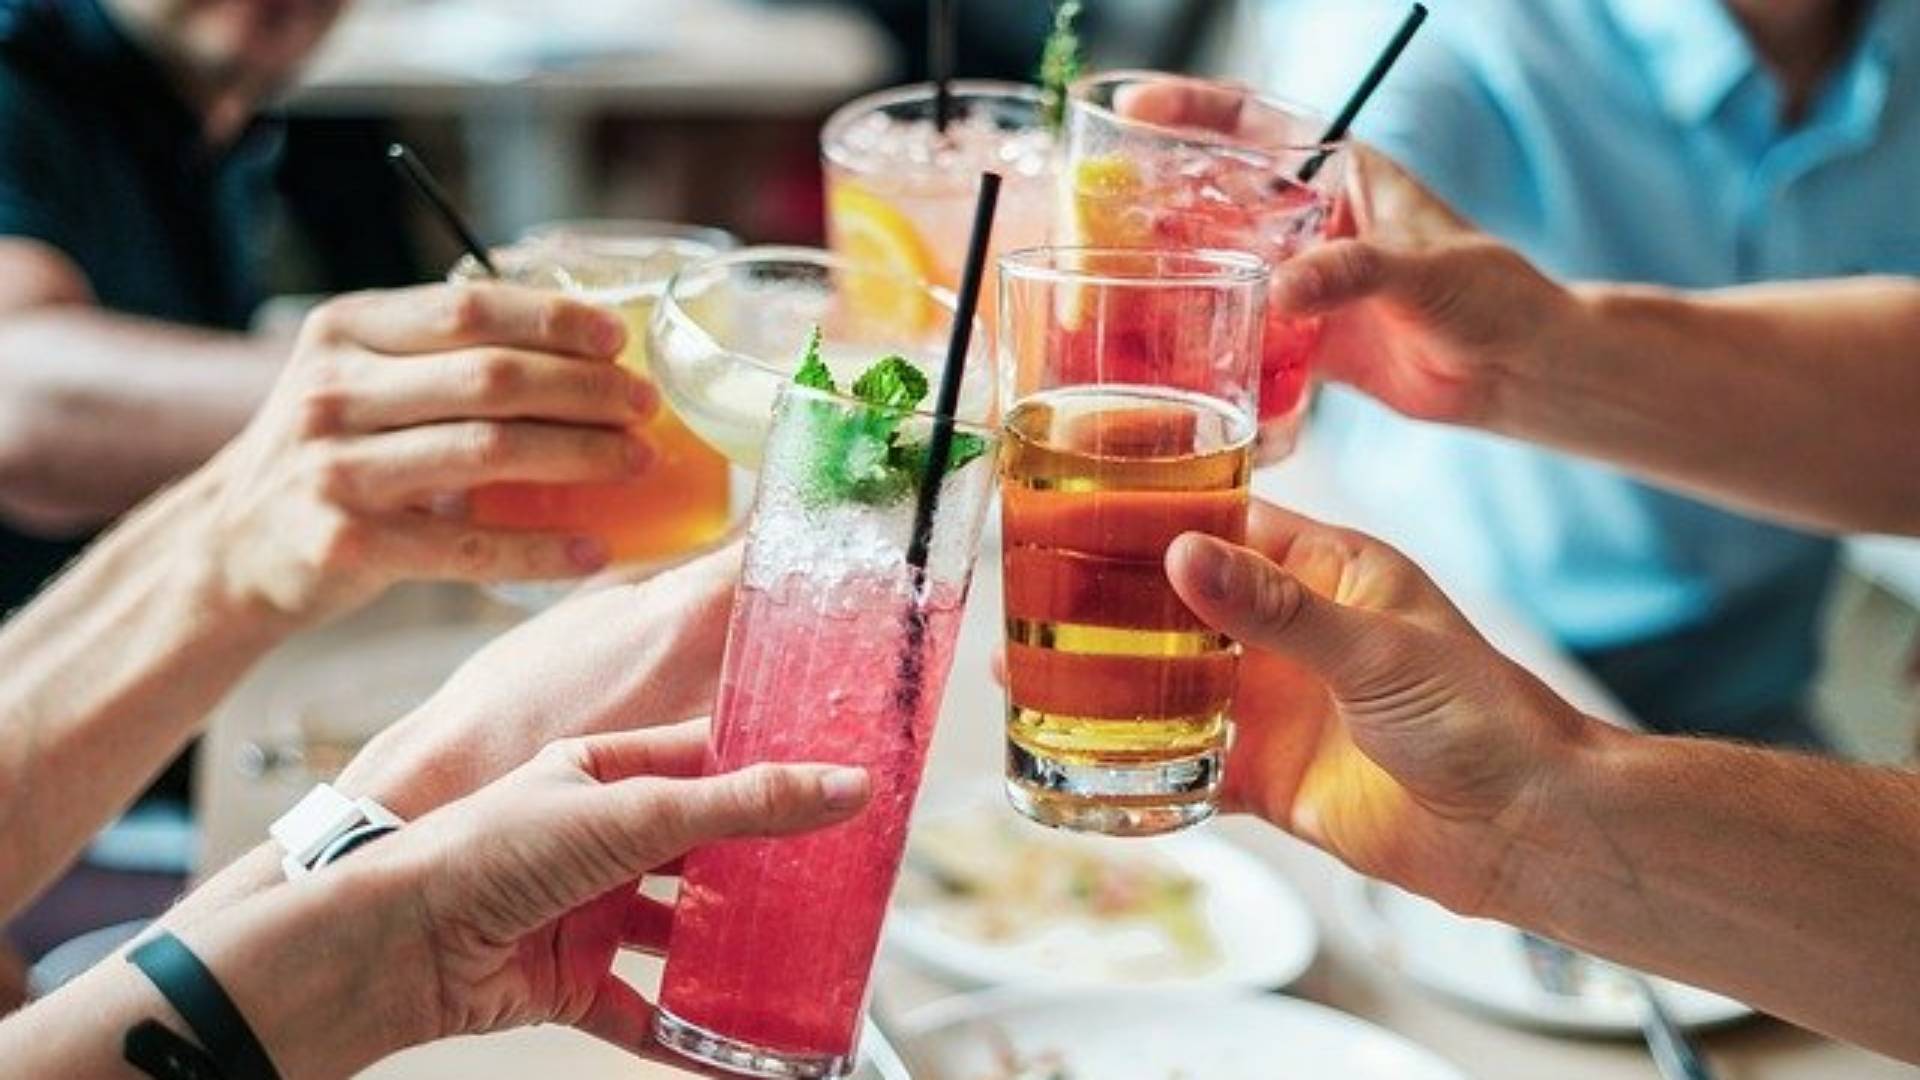 Blutalkohol: Wie viel Alkohol kann der Körper maximal vertragen?